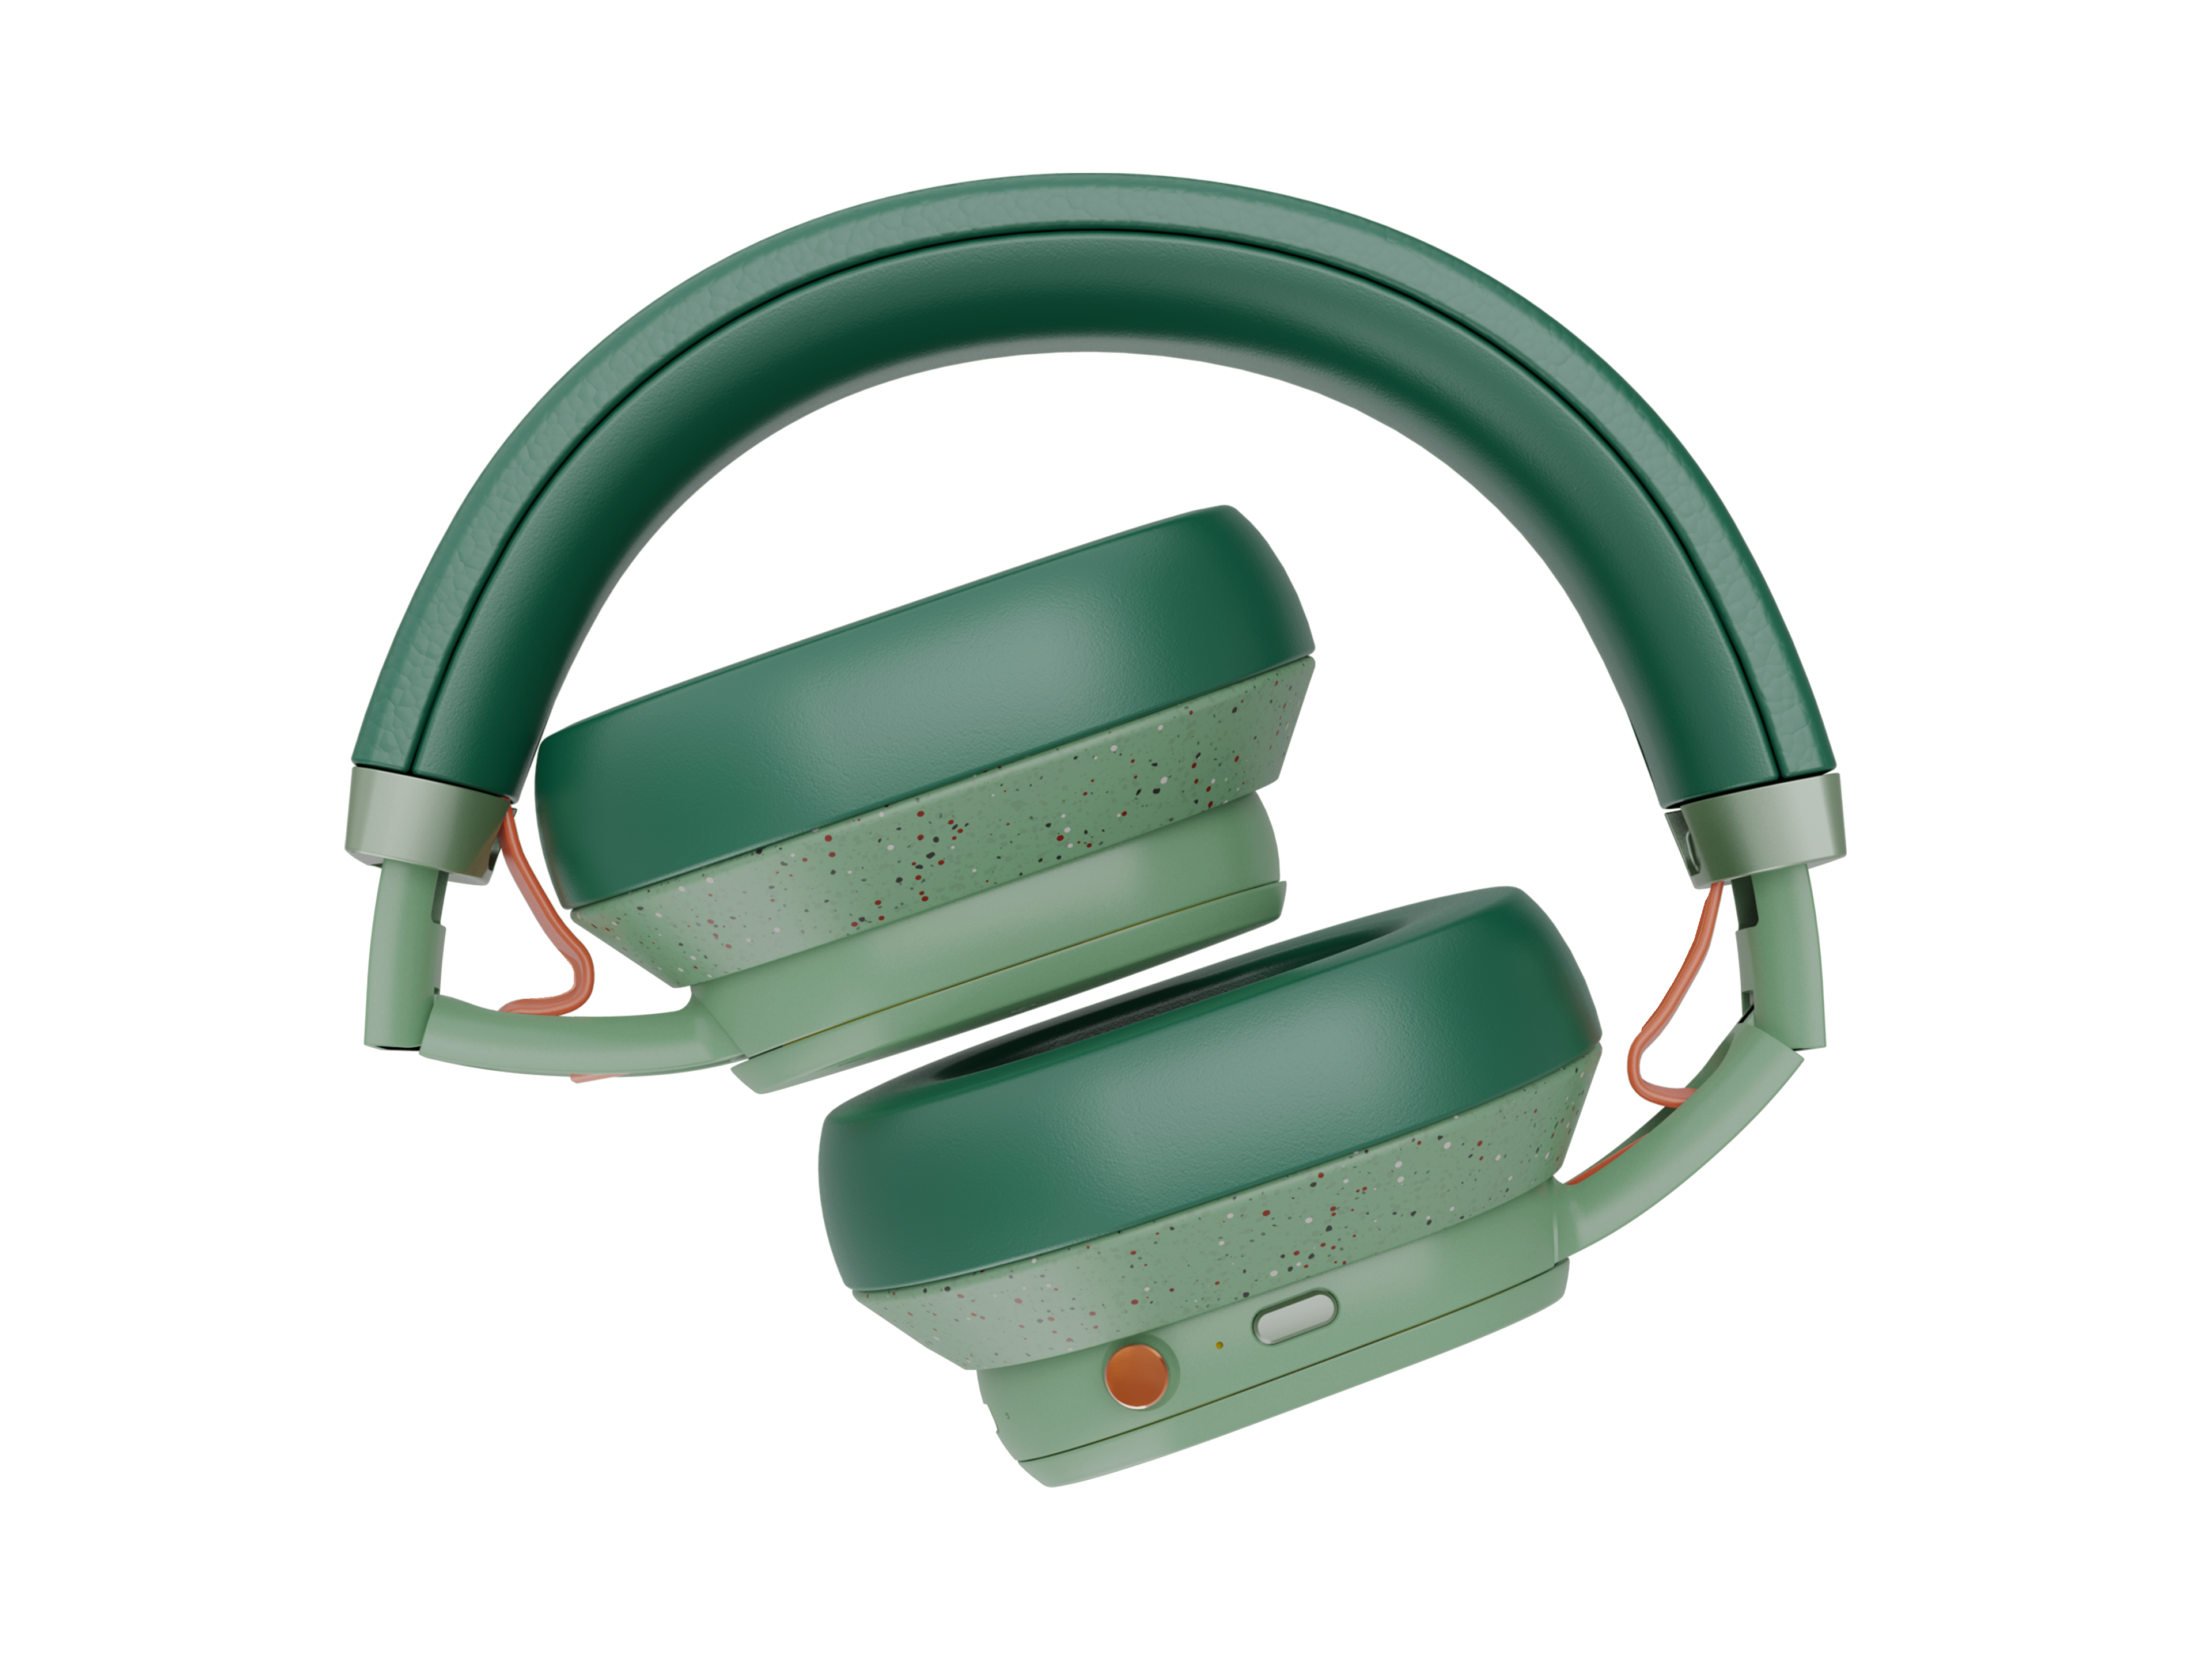 Bluetooth Kopfhörer FAIRPHONE XL, Fairbuds Grün Over-ear